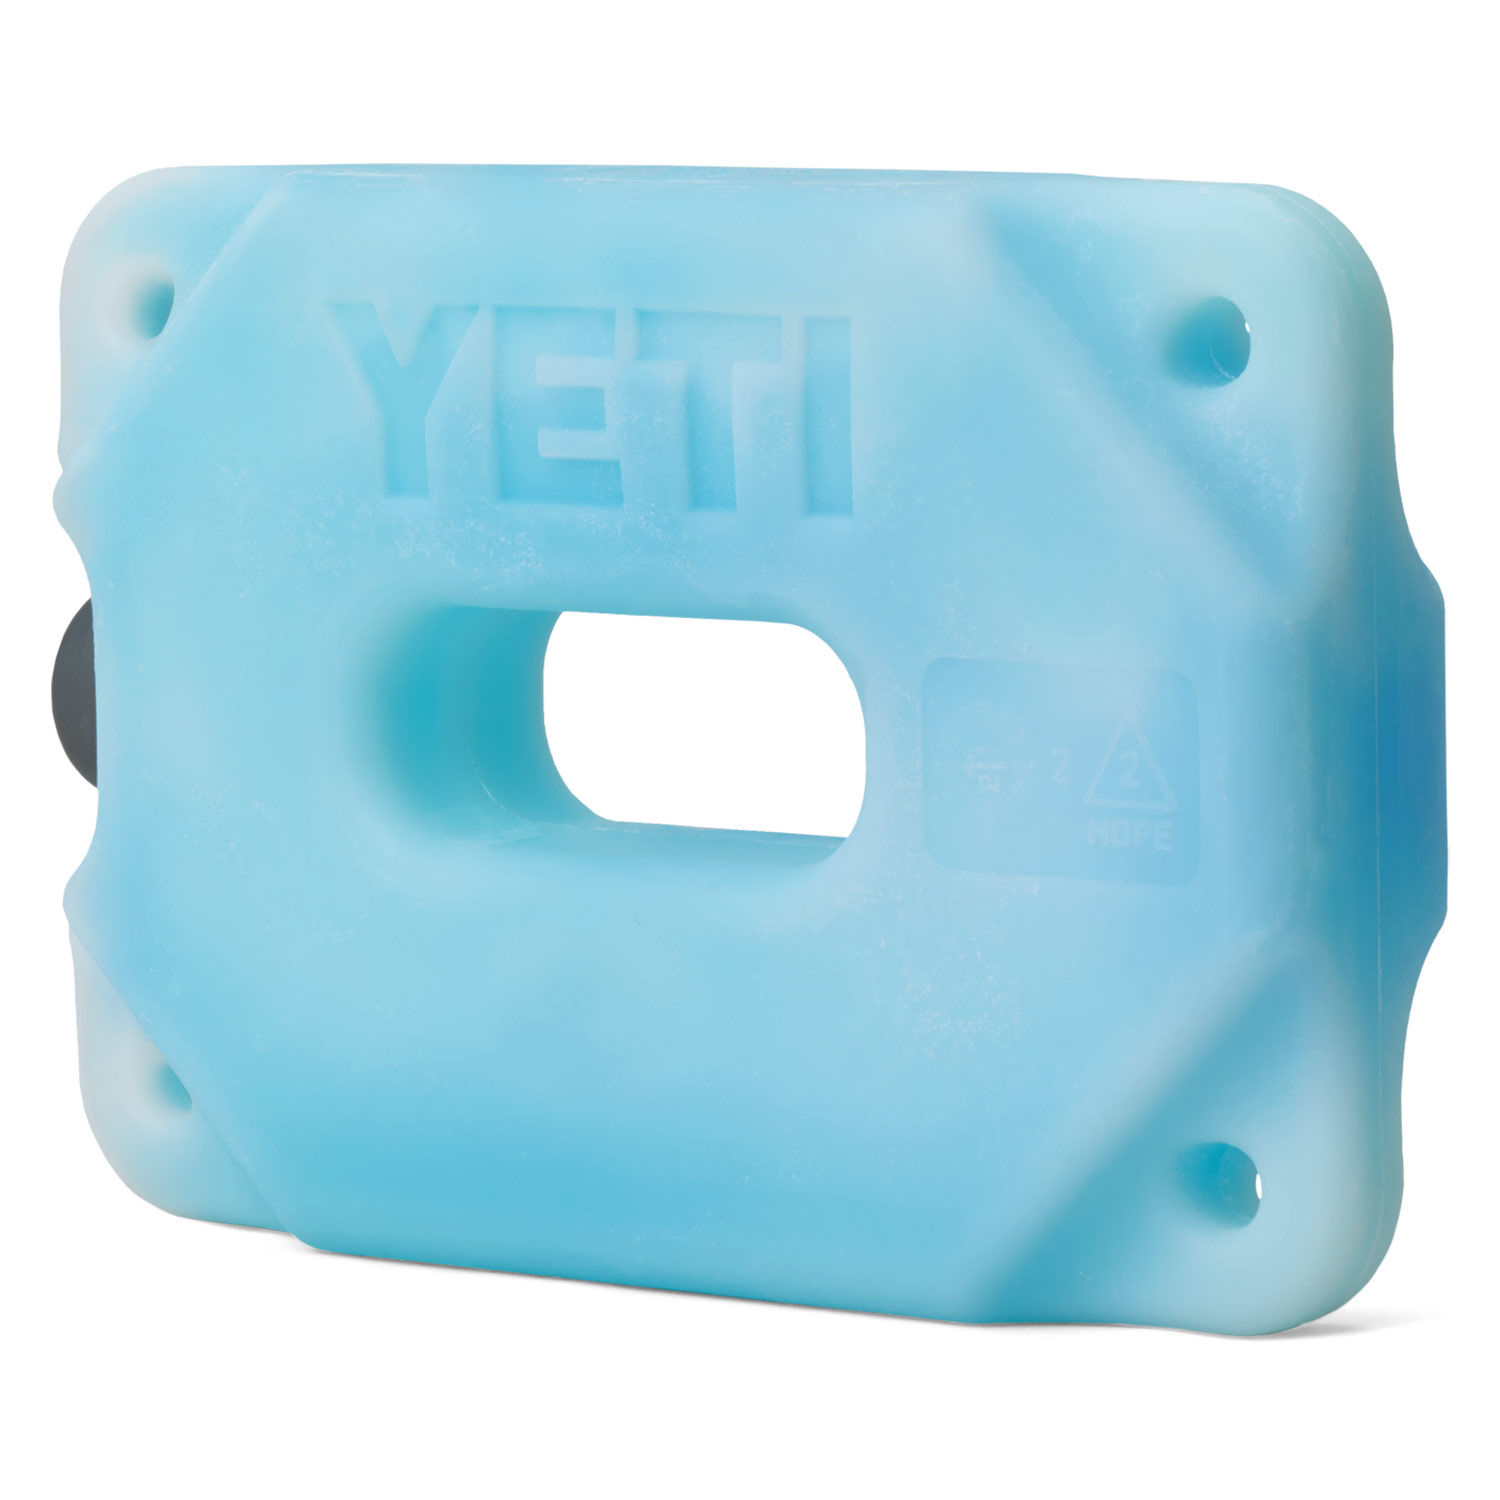 YETI' Thin Ice Medium - 2 lbs. – Trav's Outfitter